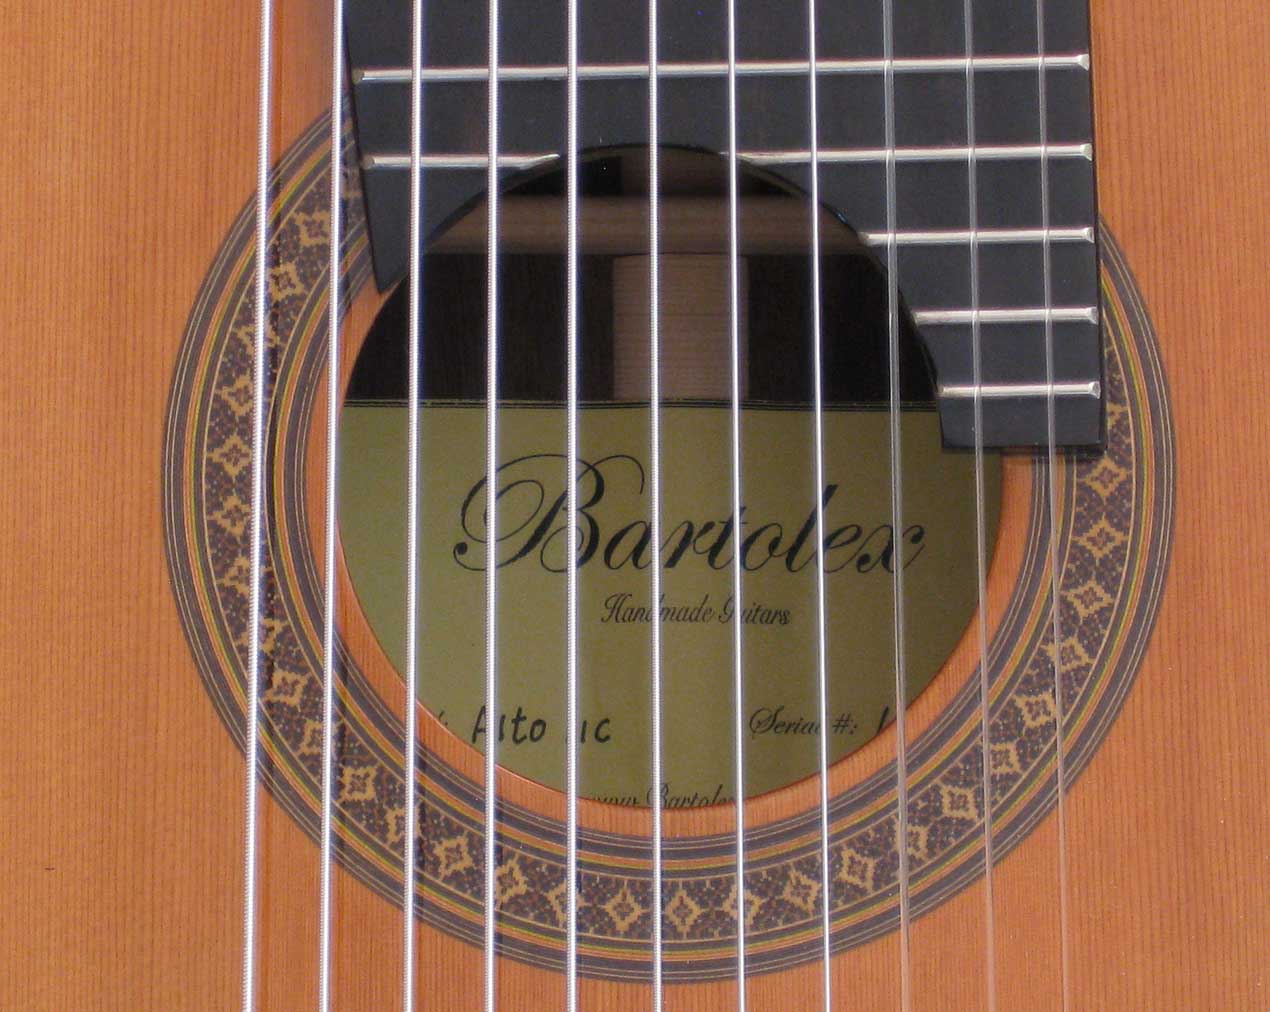 NEW Bartolex Alto 11-String Classical Harp Guitar [Cedar / Indian Rosewood]